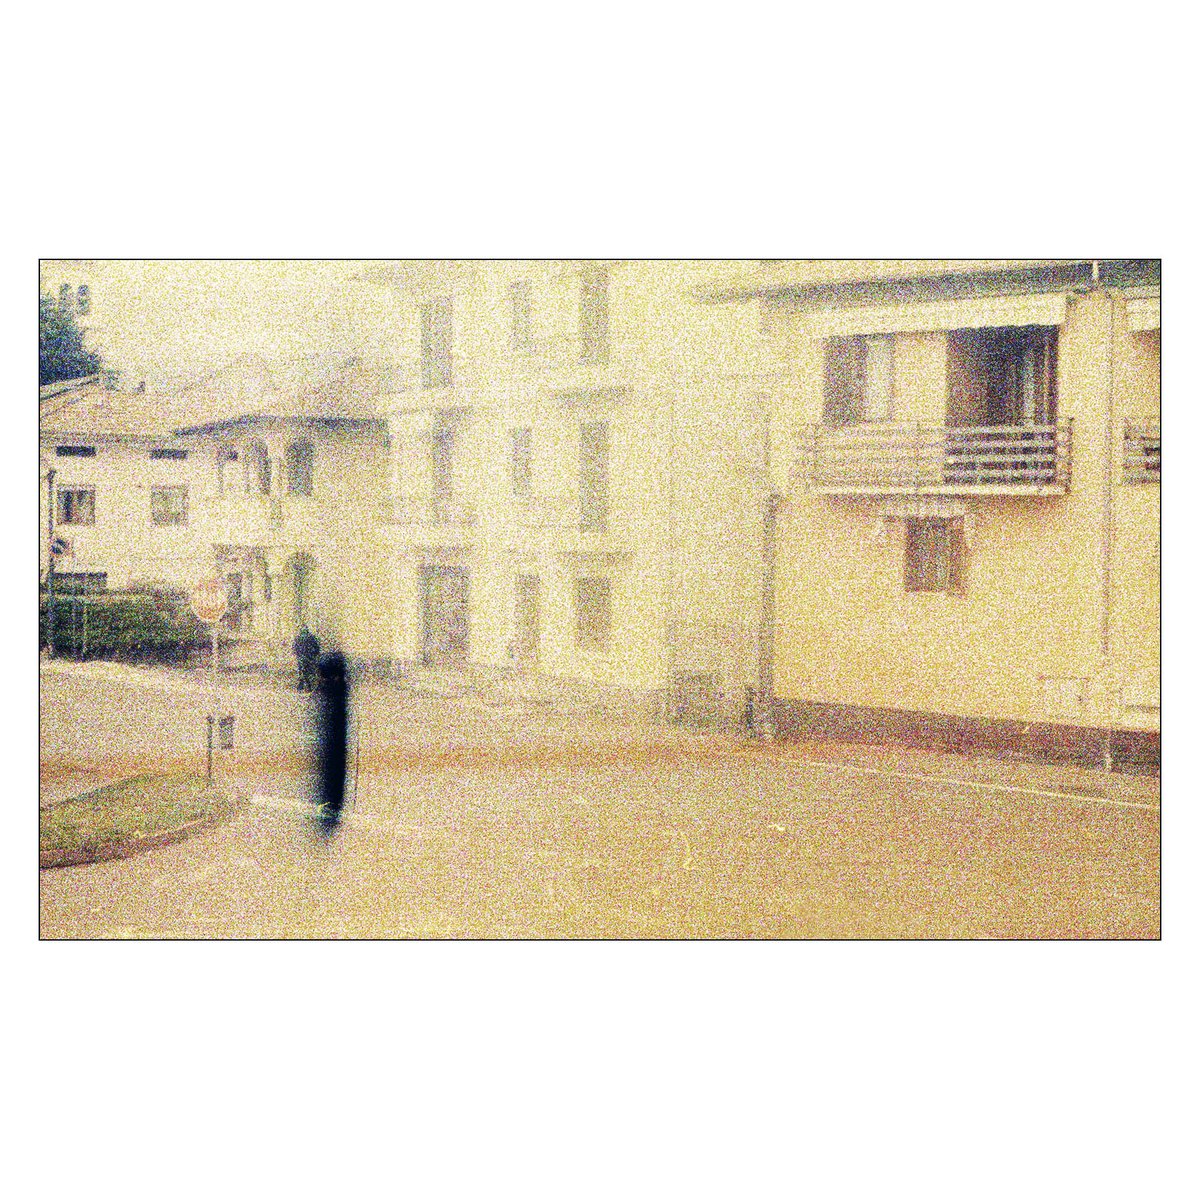 #colorfilmphotography #pratosesia #fotografiaanalogica #c41 #developedathome #35mmfilm #paesaggioitaliano #italianlandscape #filmphotography